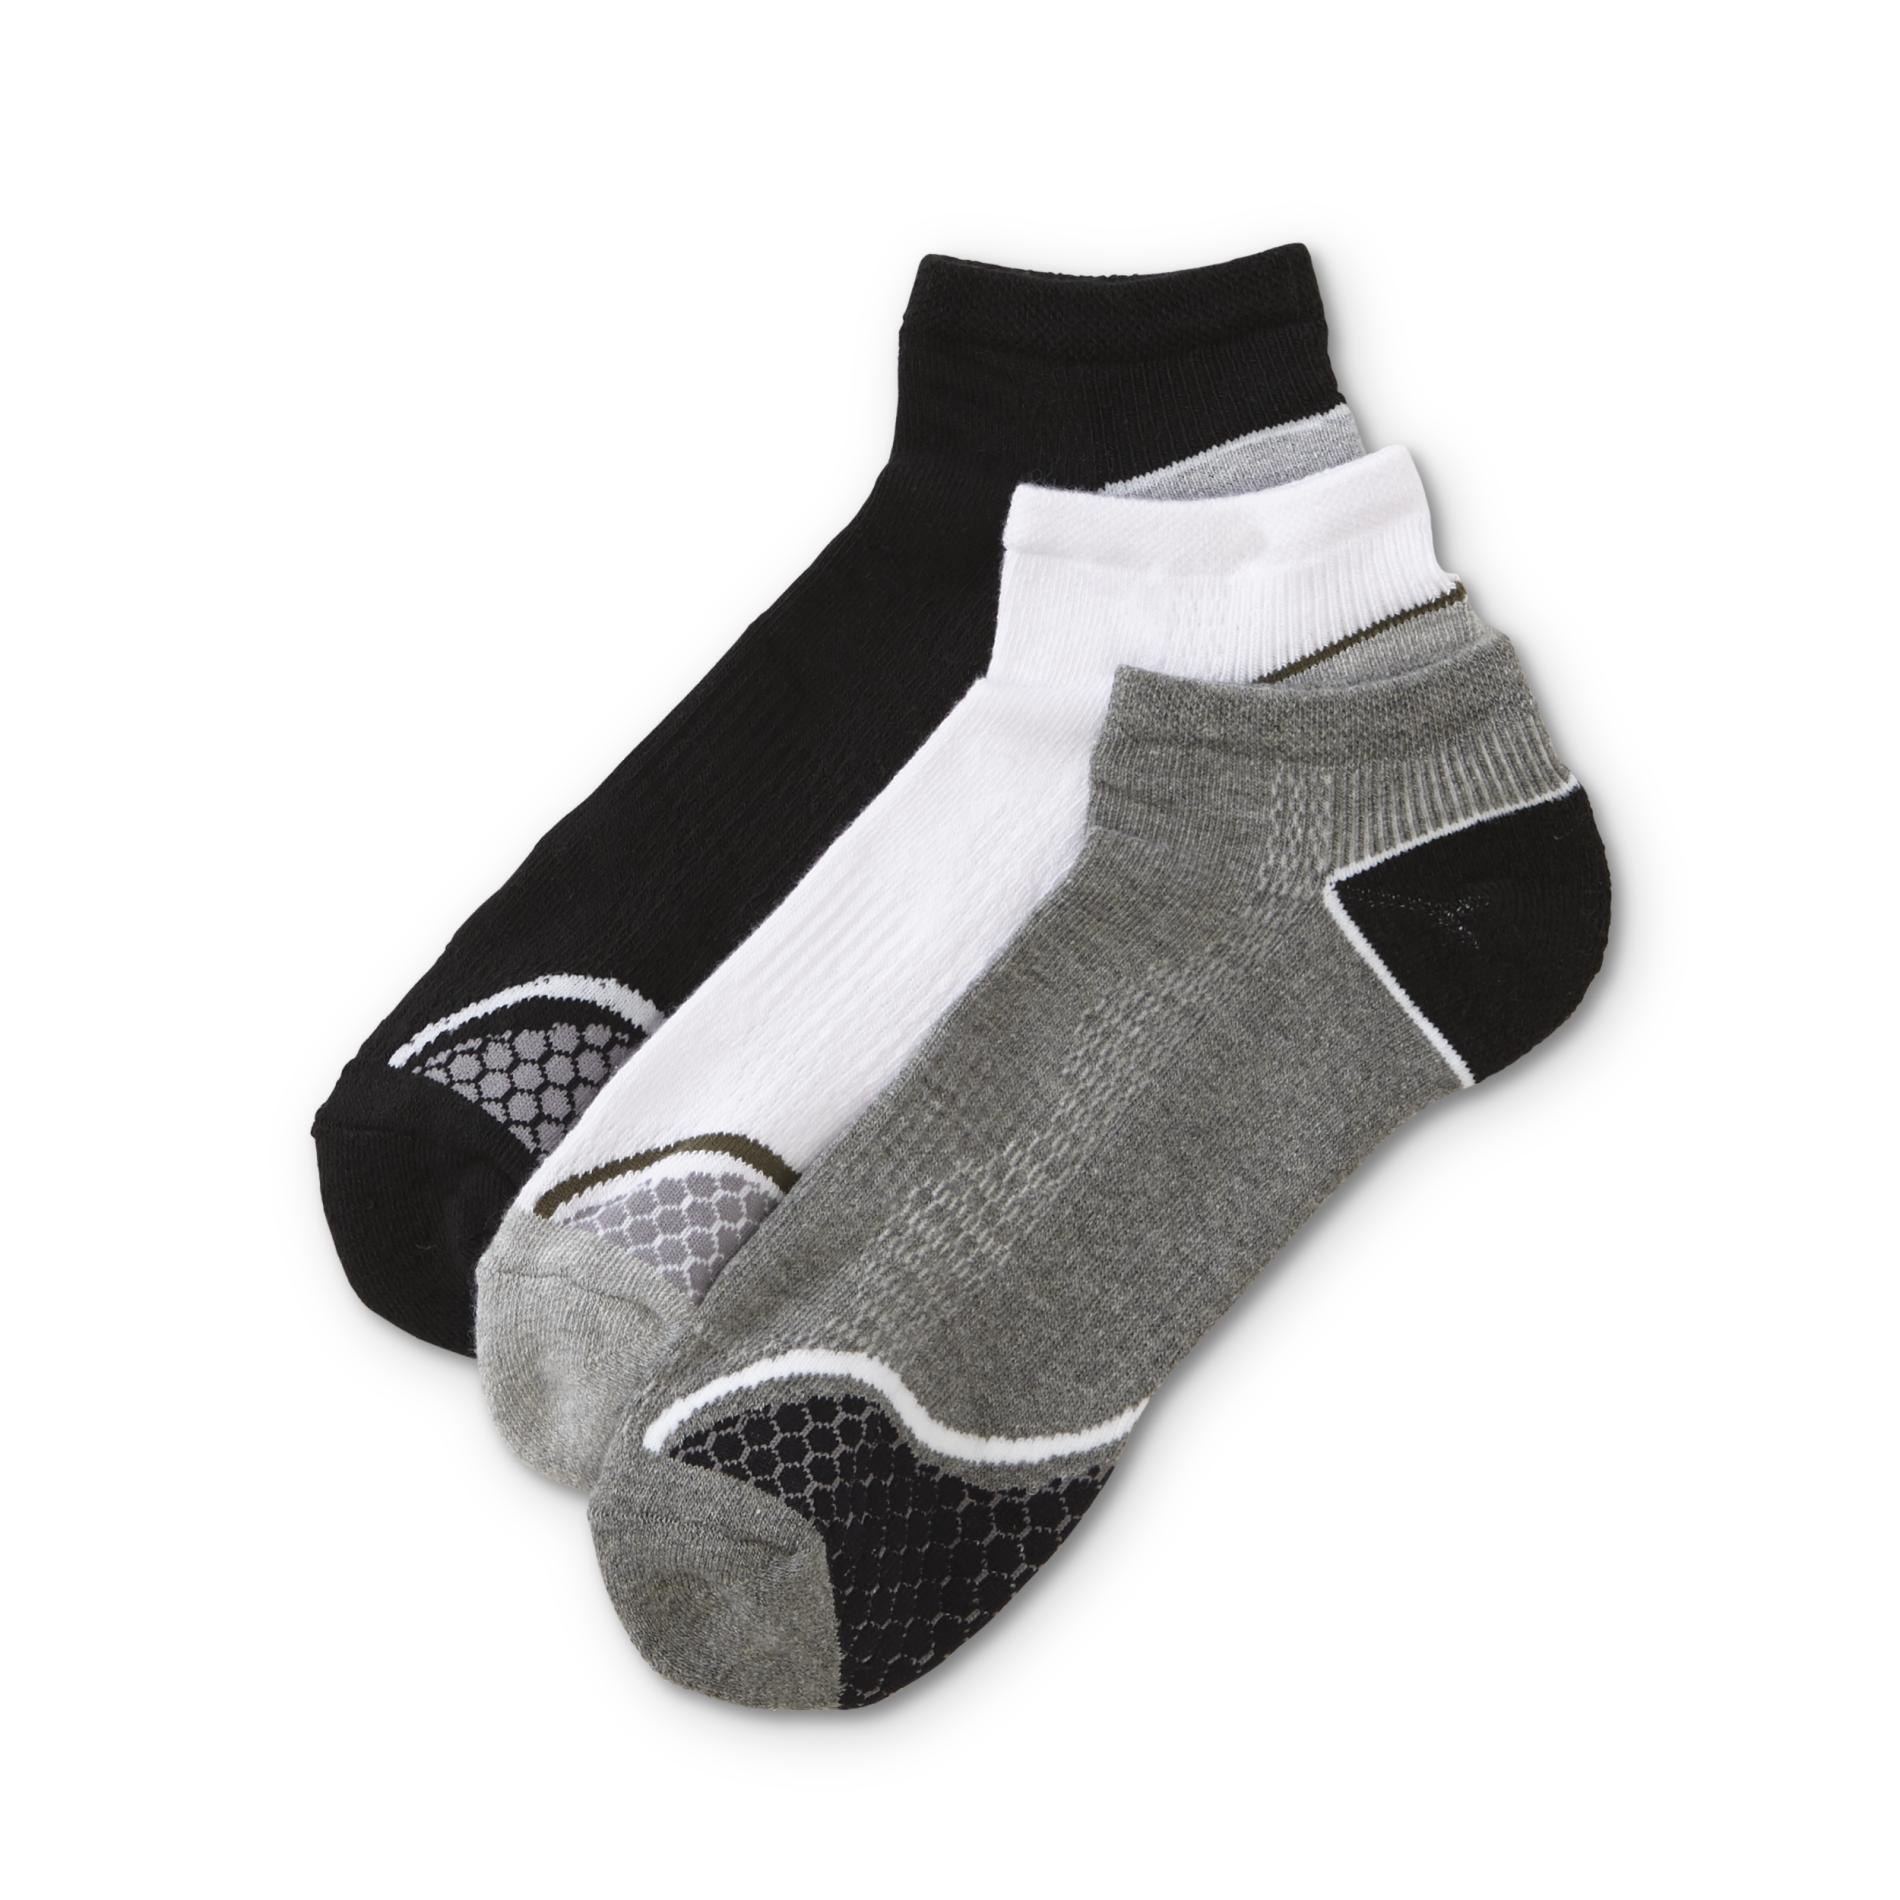 Everlast® Men's 3-Pairs Performance Low-Cut Socks